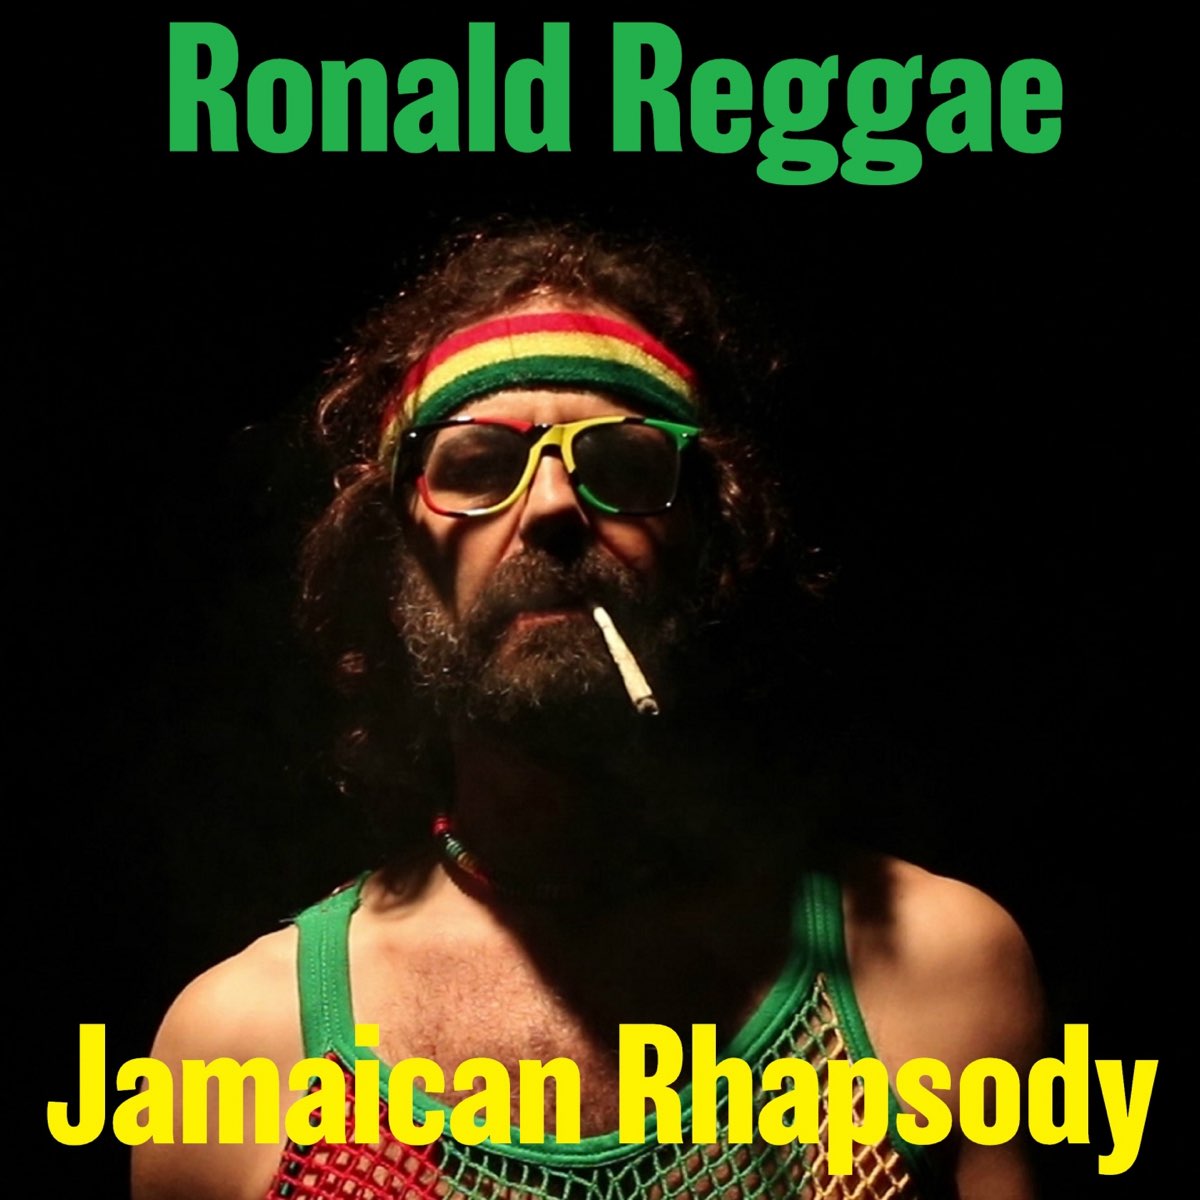 Jamaican Rhapsody - Single by Ronald Reggae on Apple Music